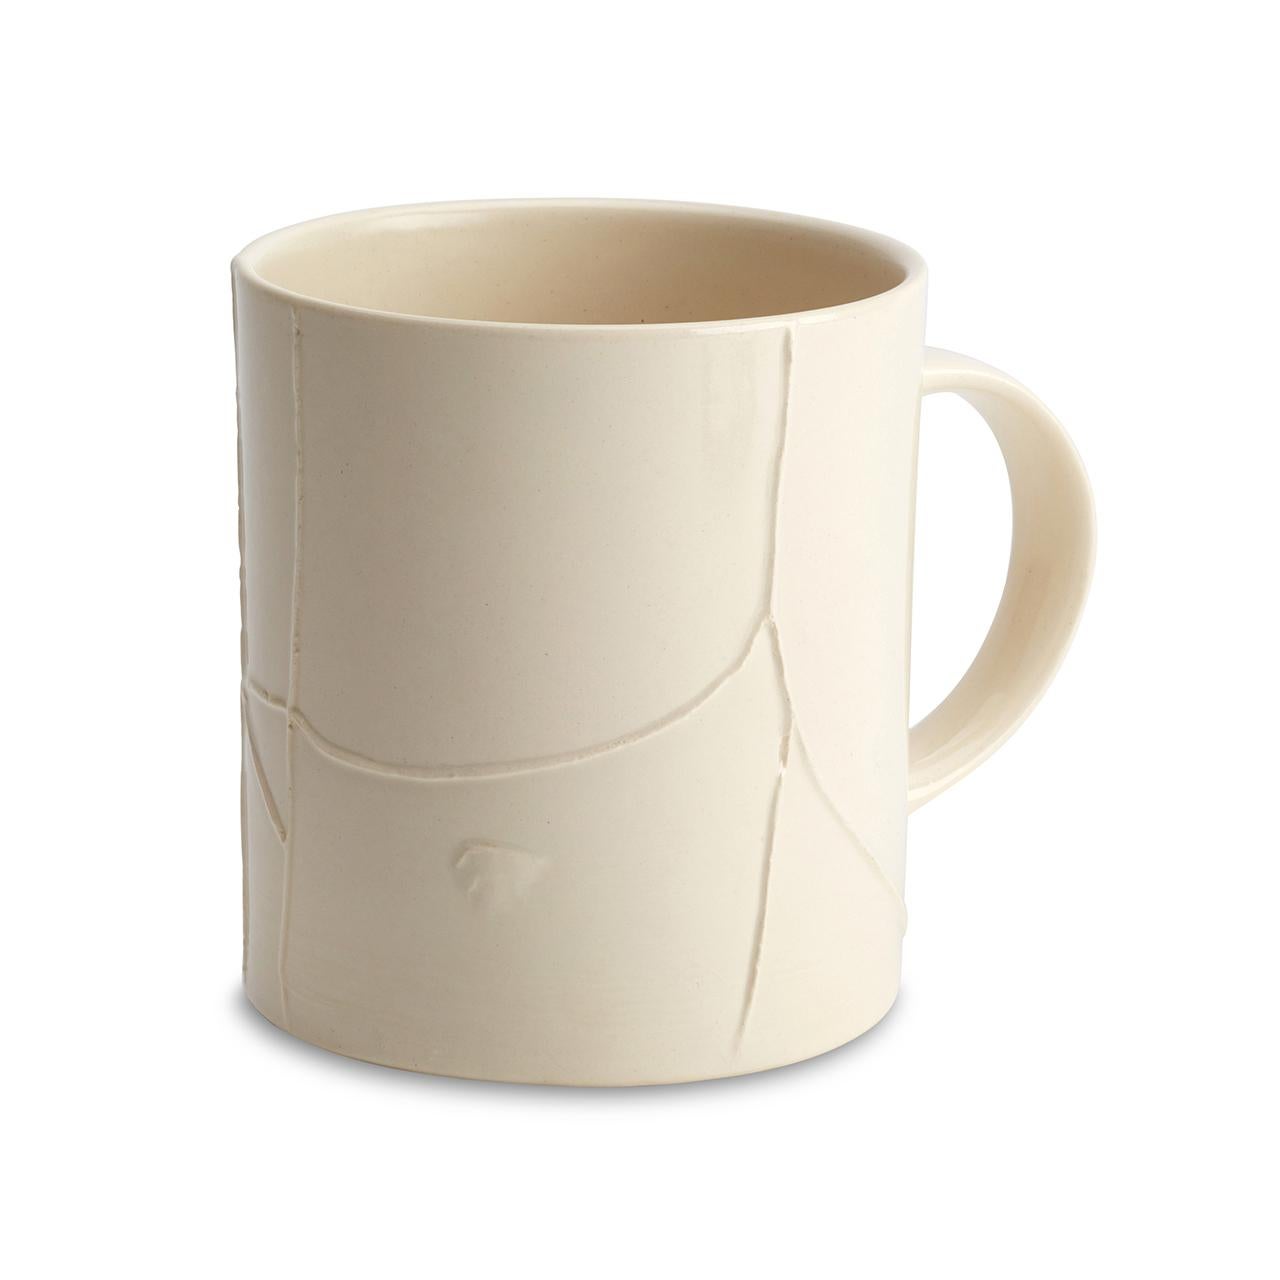 teapot and mug set